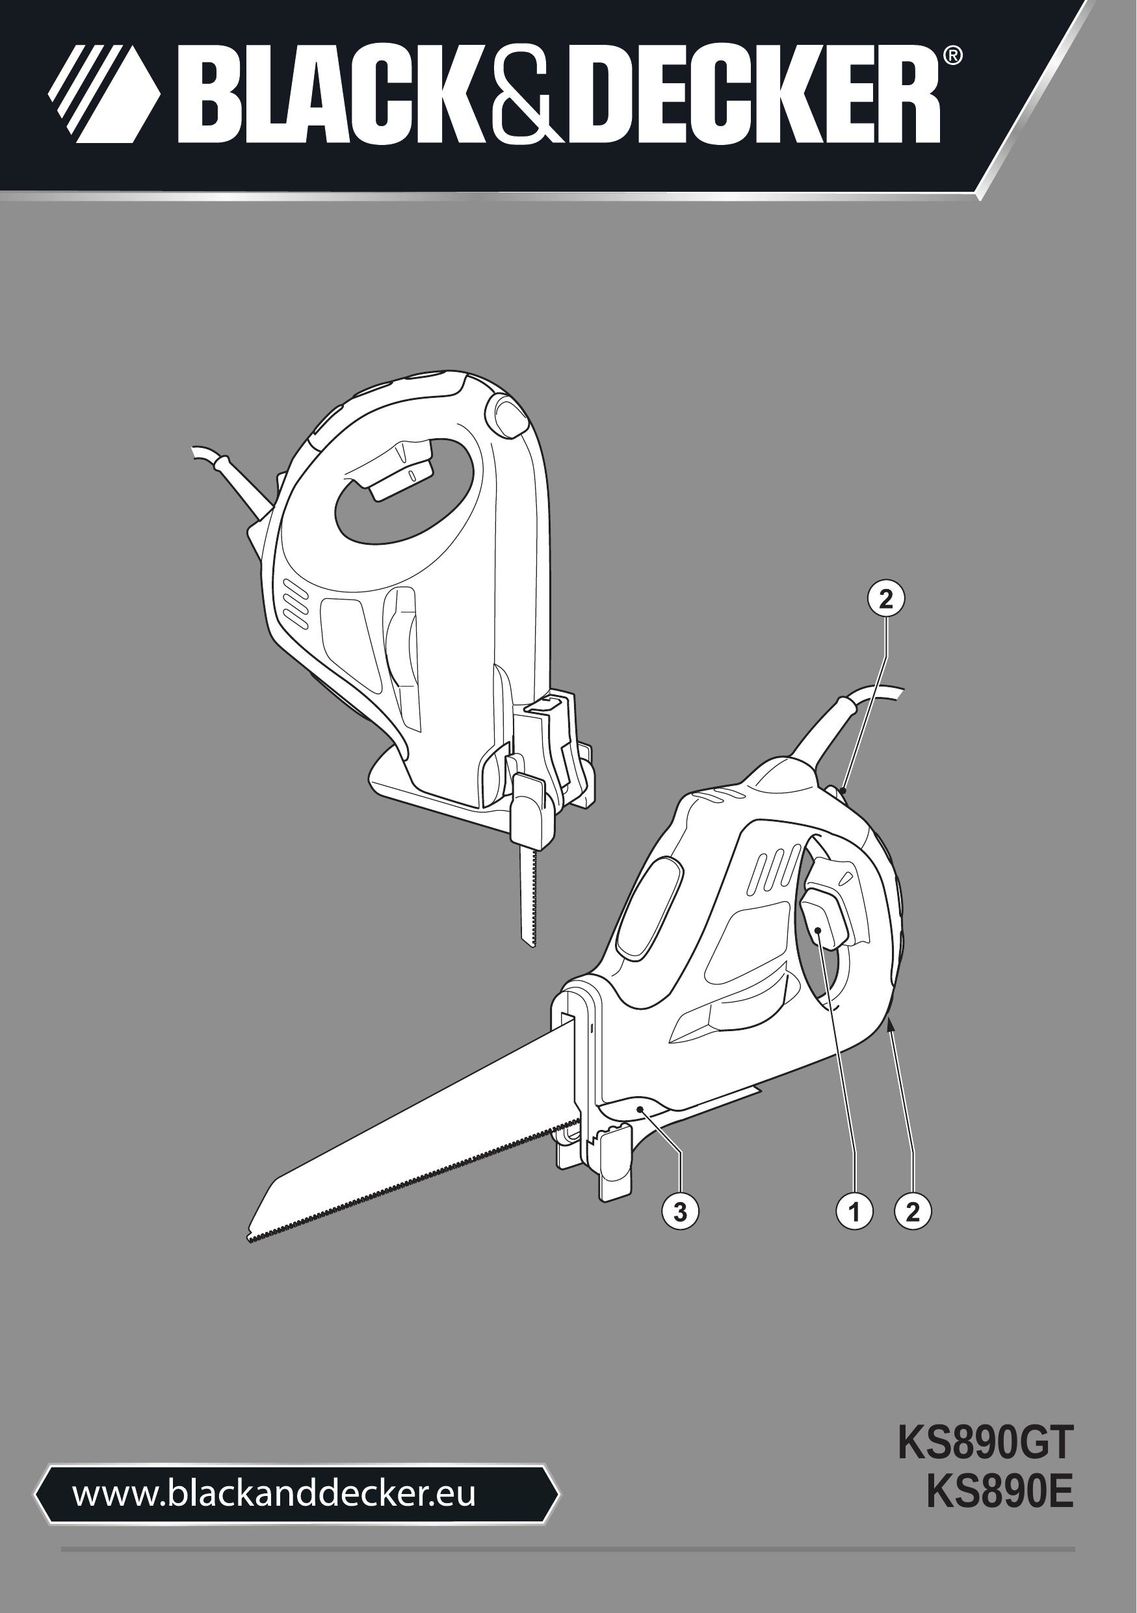 Black & Decker KS890GT Cordless Saw User Manual